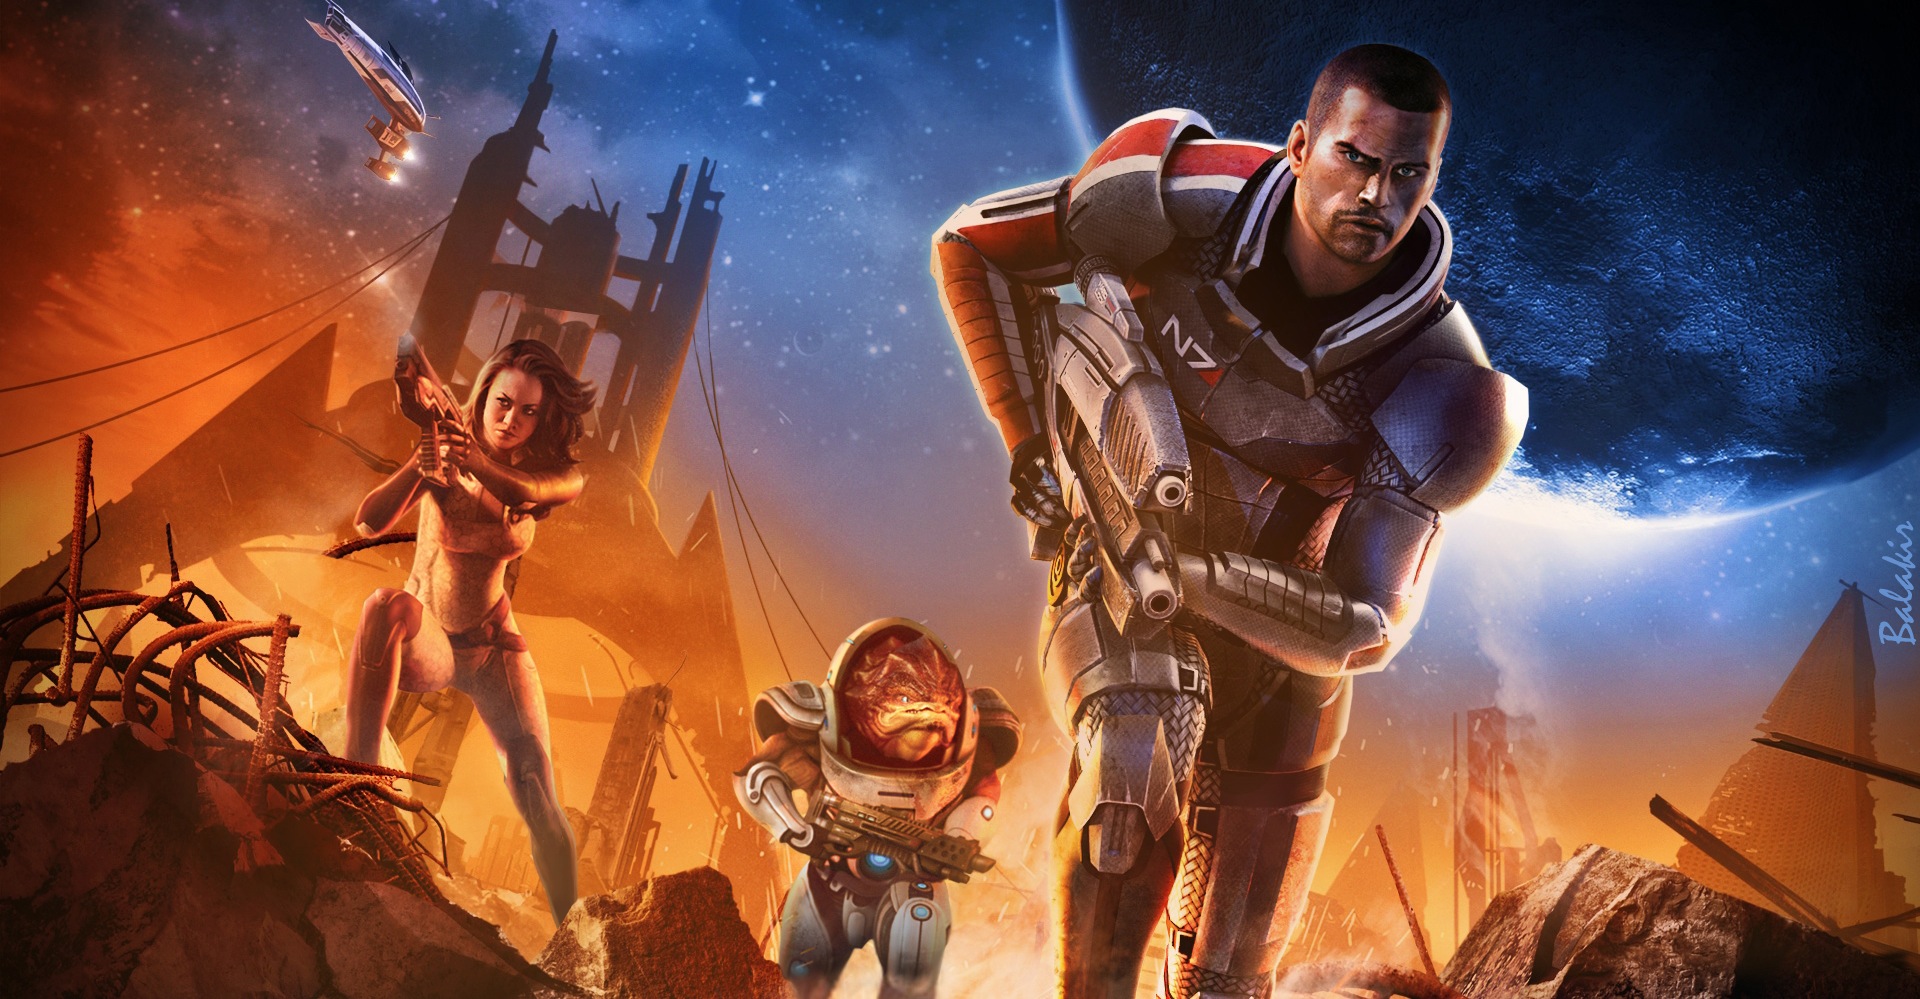 <em>Mass Effect:</em> An Imaginative Space Epic That Awes